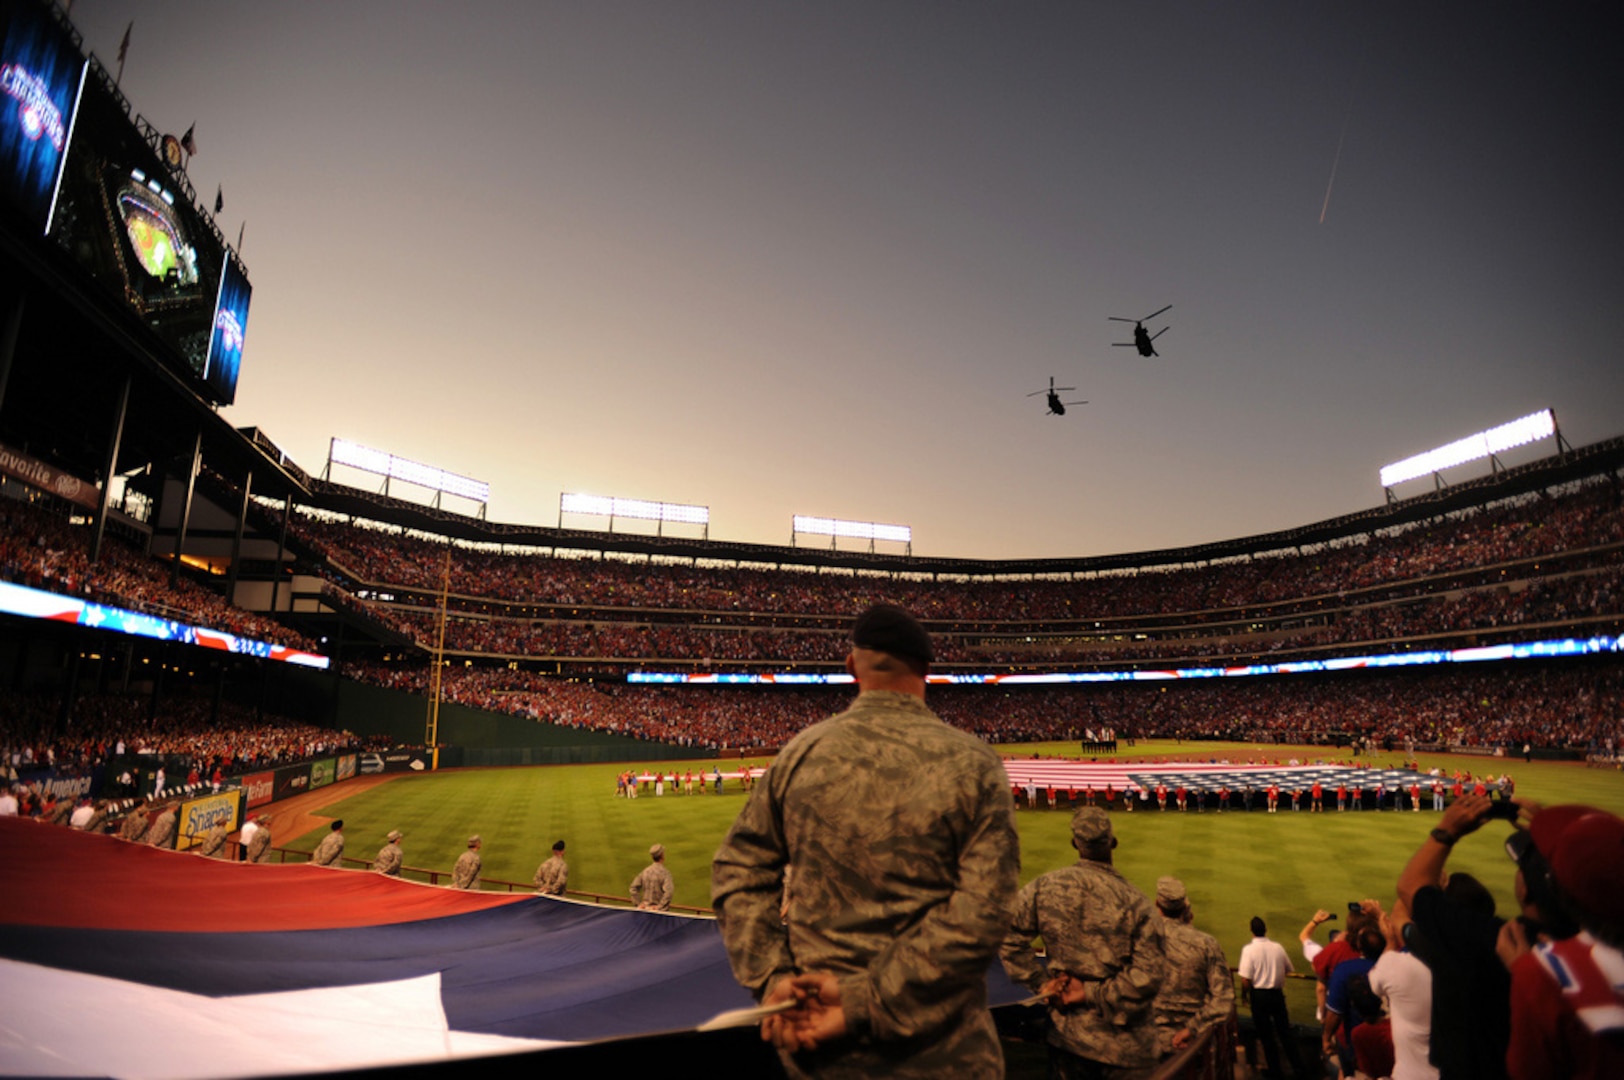 Arlington Stadium - History, Photos and more of the Texas Rangers